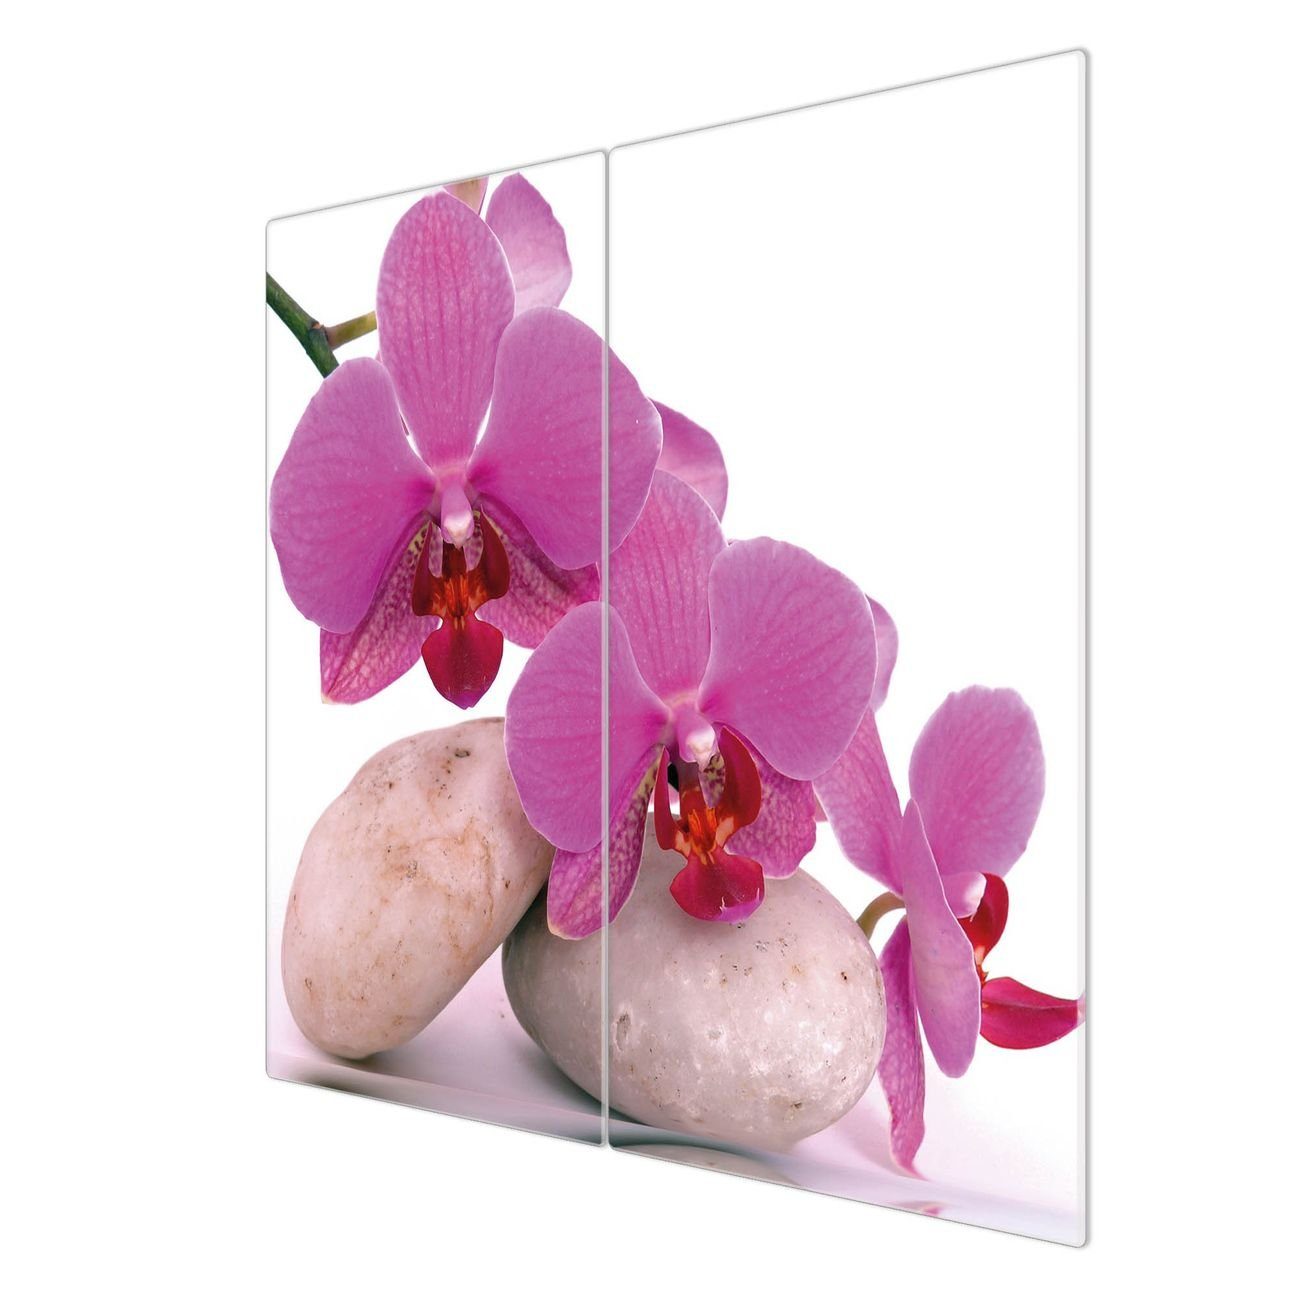 Gummifüßchen) banjado 2 Herd-Abdeckplatte Glas tlg., (gehärtet, selbstklebende inkl. Orchidee,